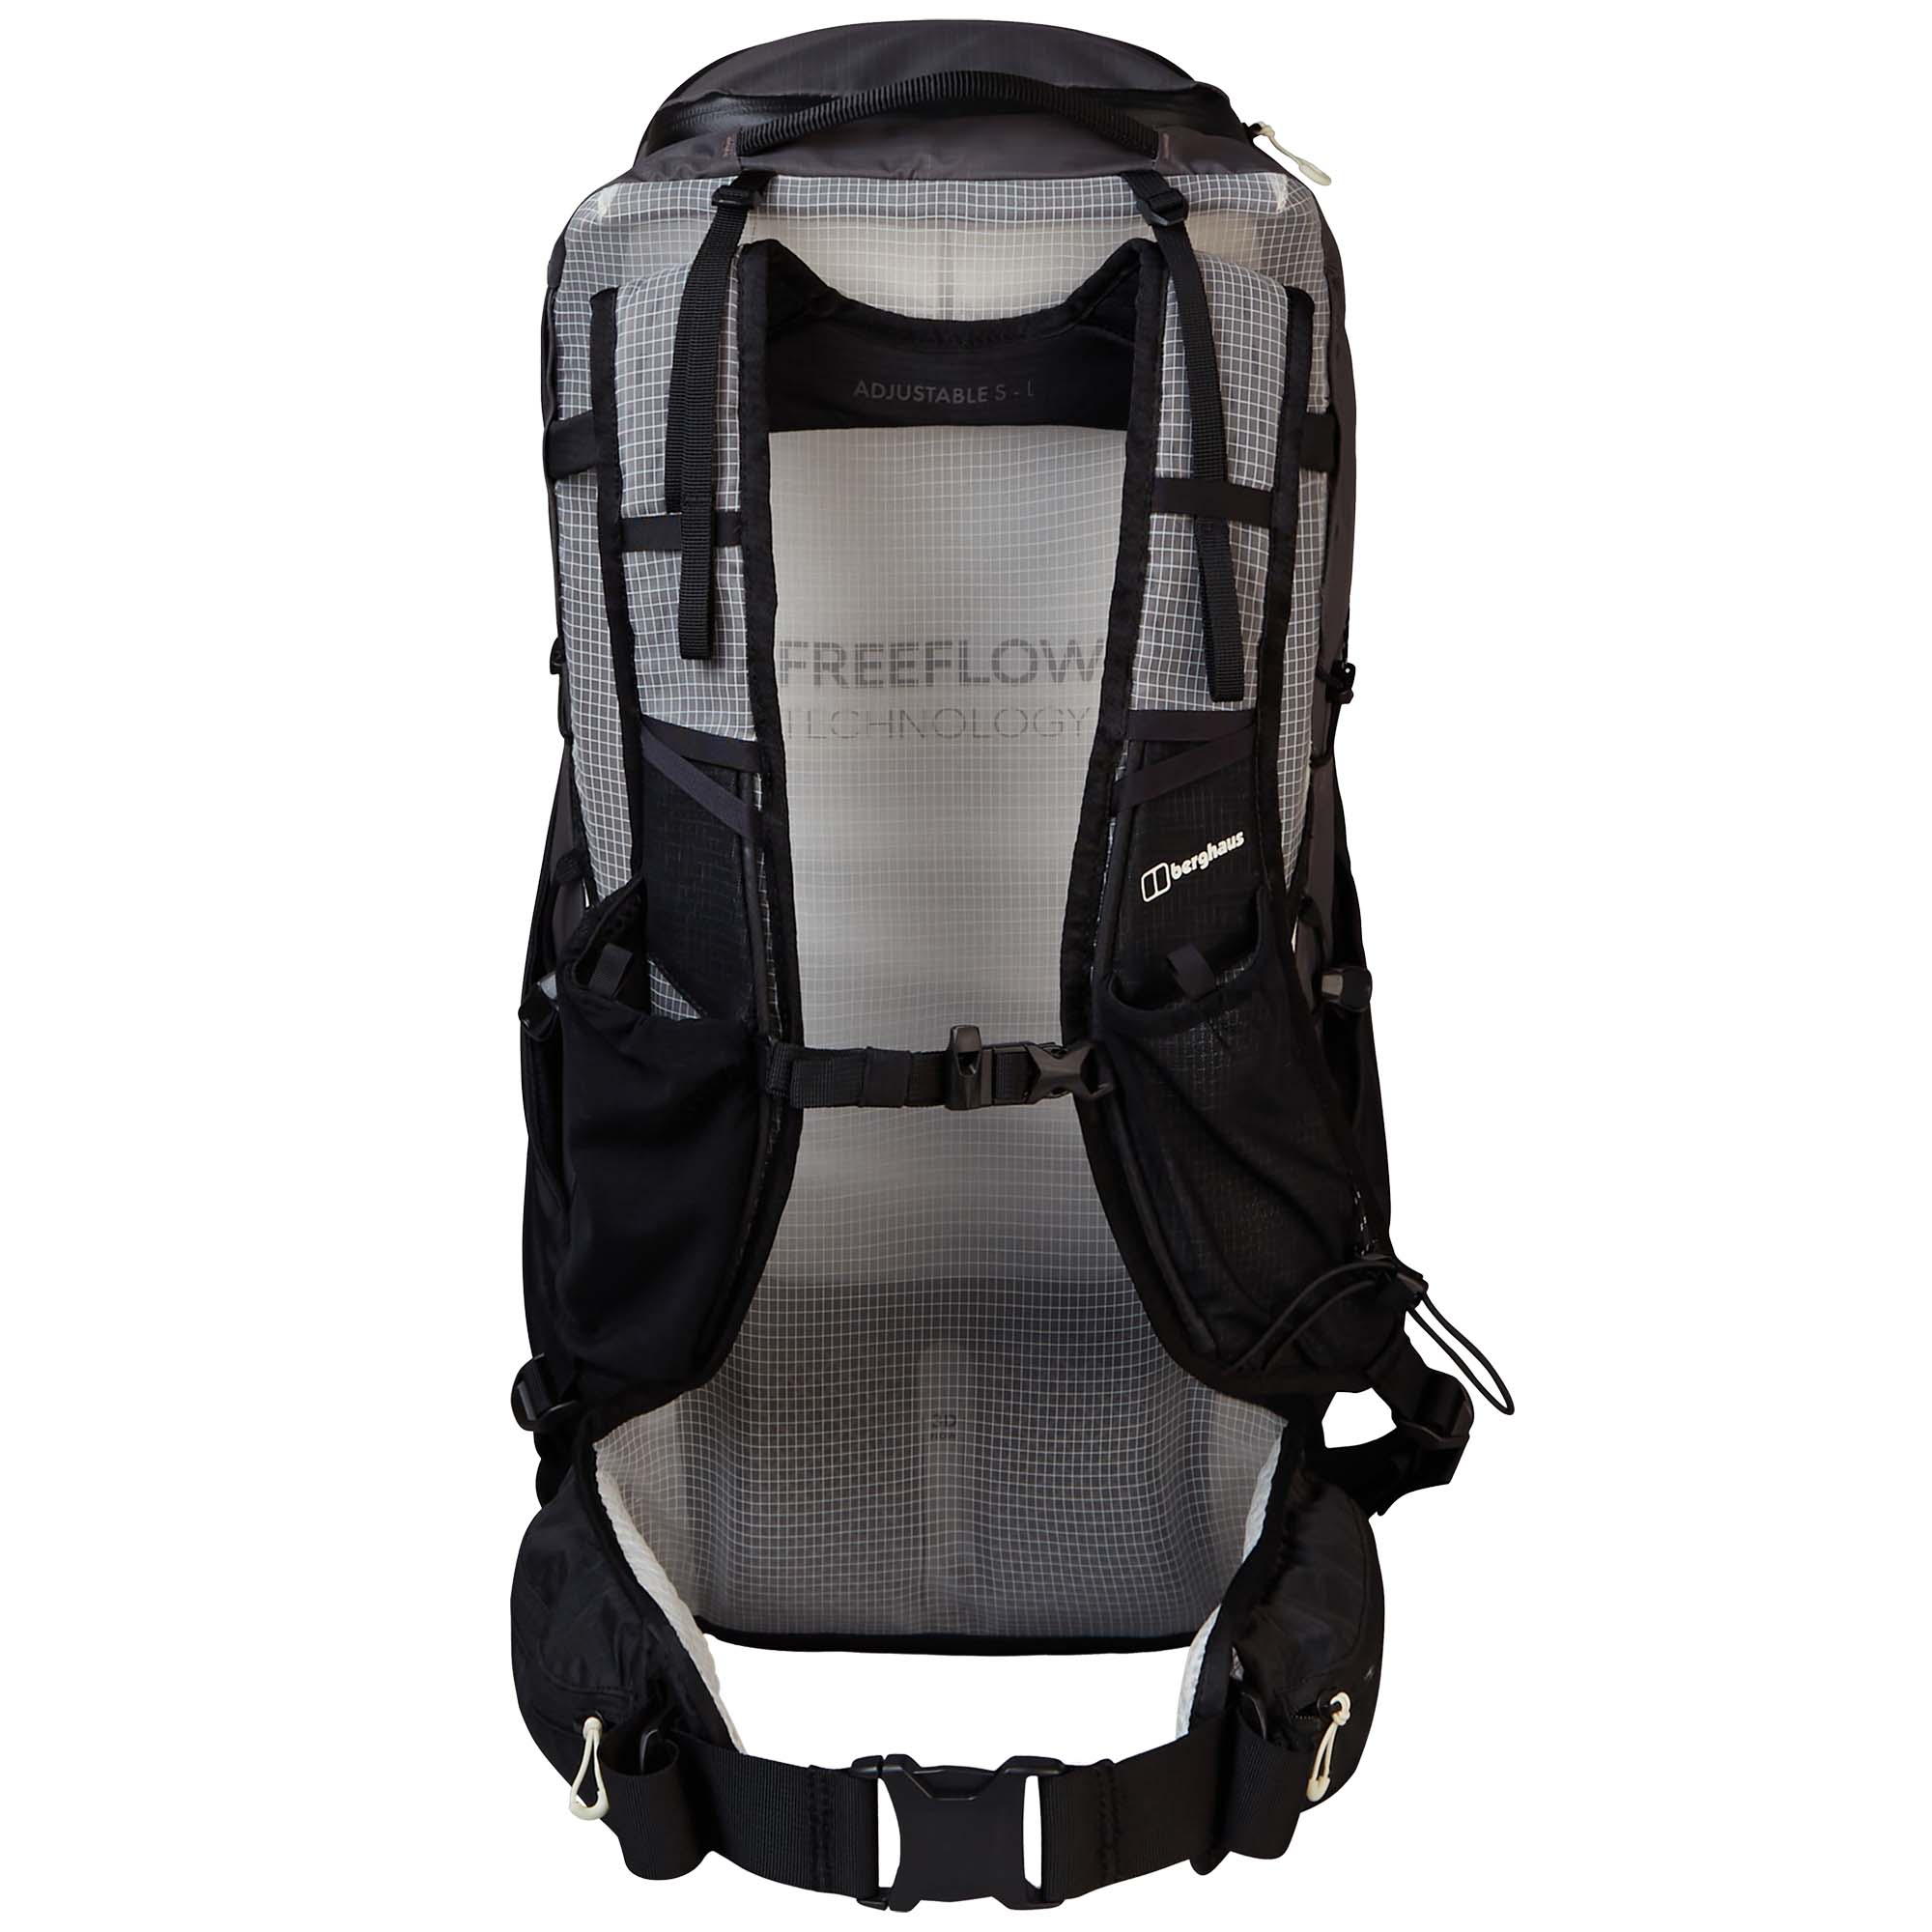 Berghaus 3D Freeflow 30+5 Hiking Backpack